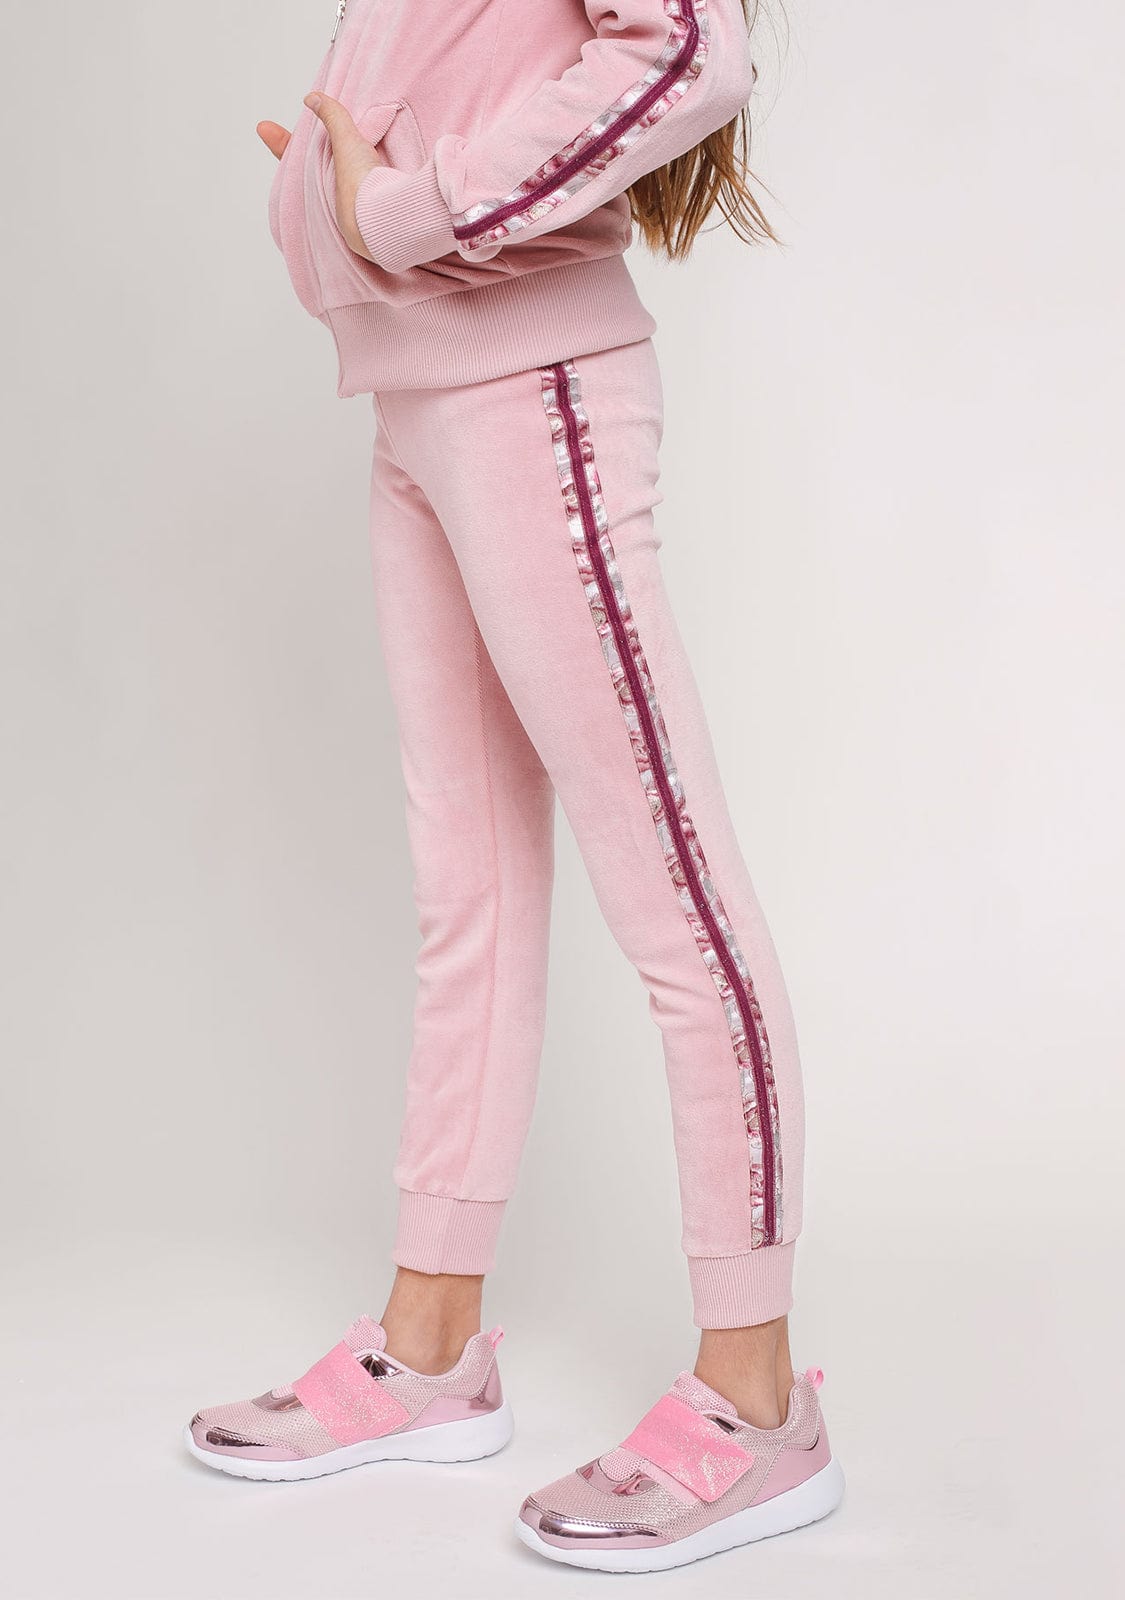 CONGUITOS TEXTIL Clothing Girl's Pink Jogging